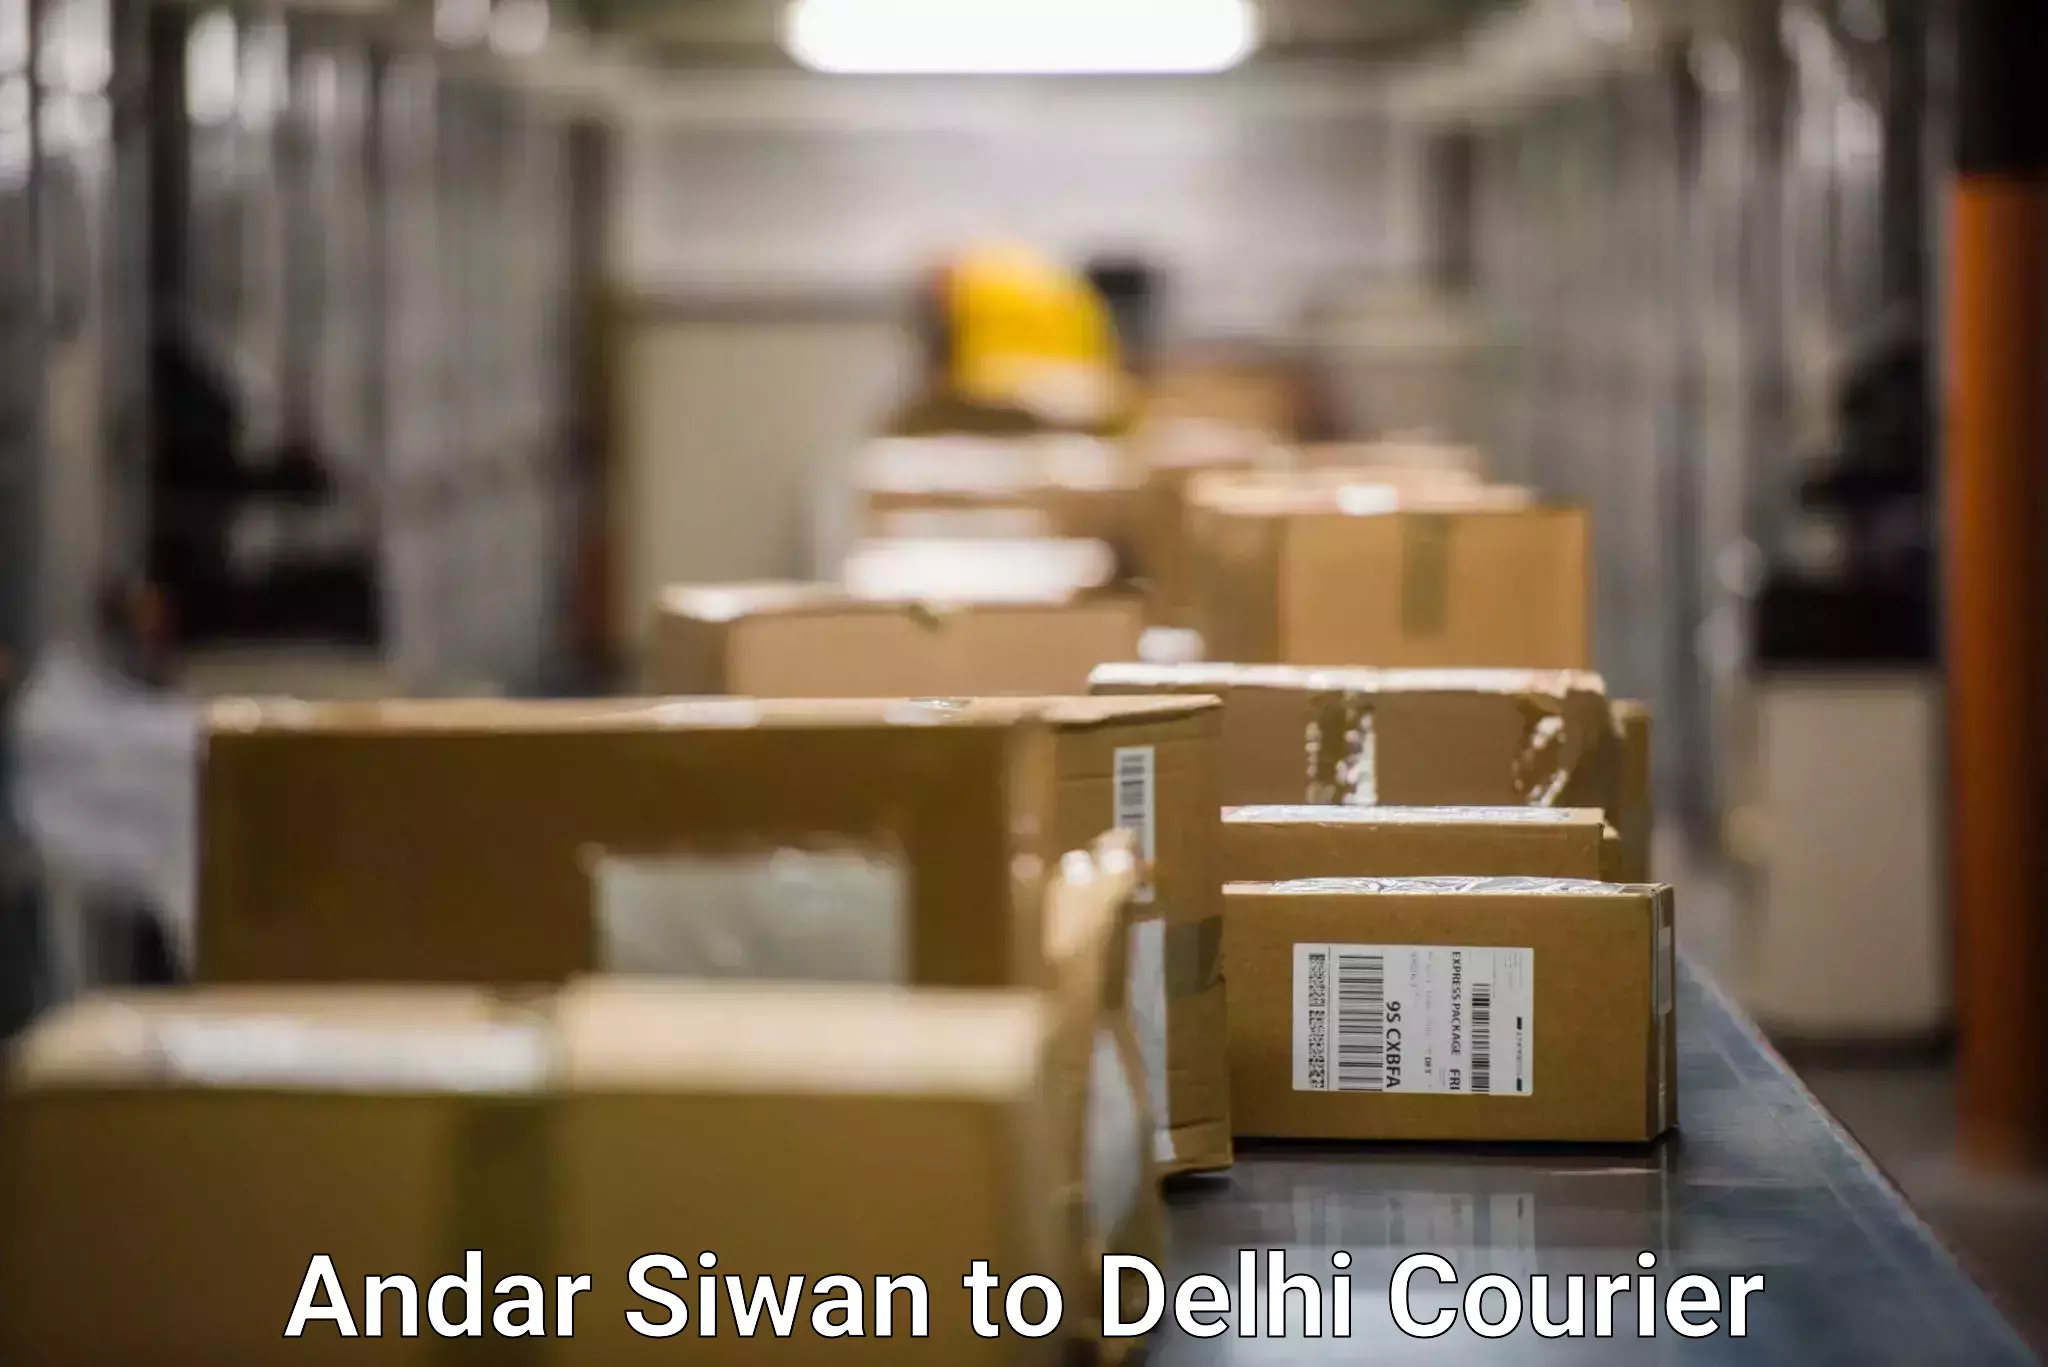 Courier service efficiency Andar Siwan to Delhi